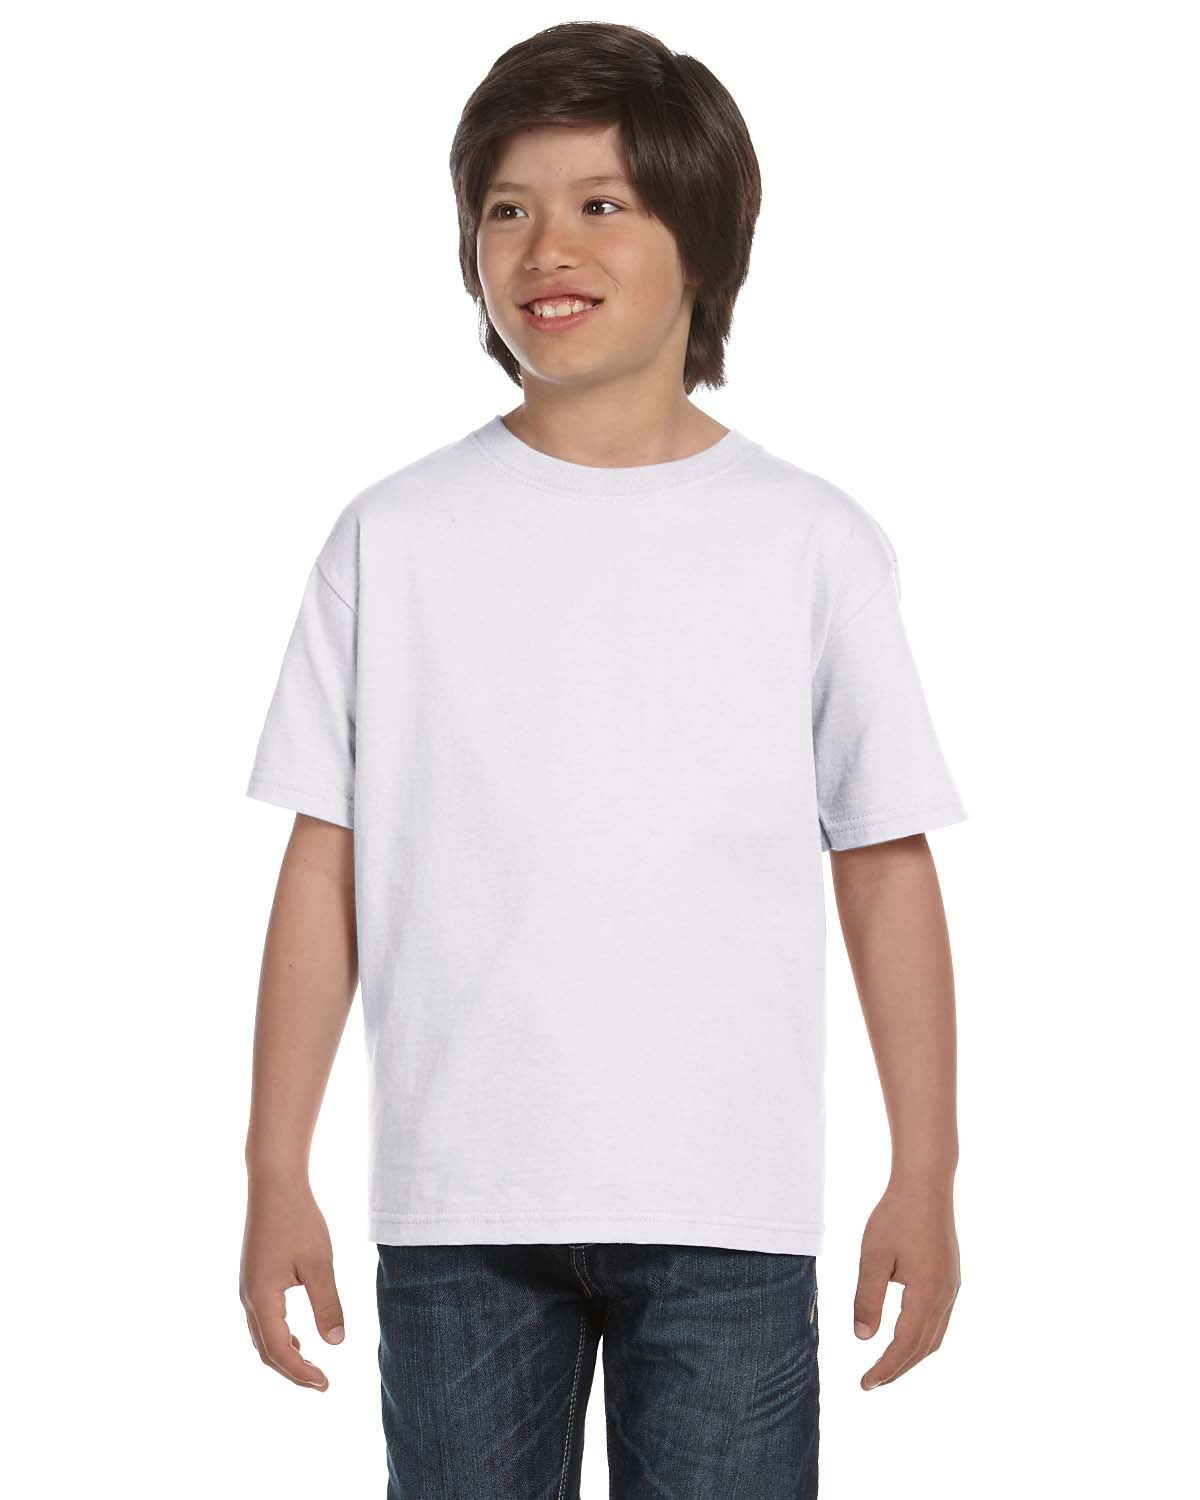 Hanes 5480 - ComfortSoft Heavyweight Youth T-Shirt